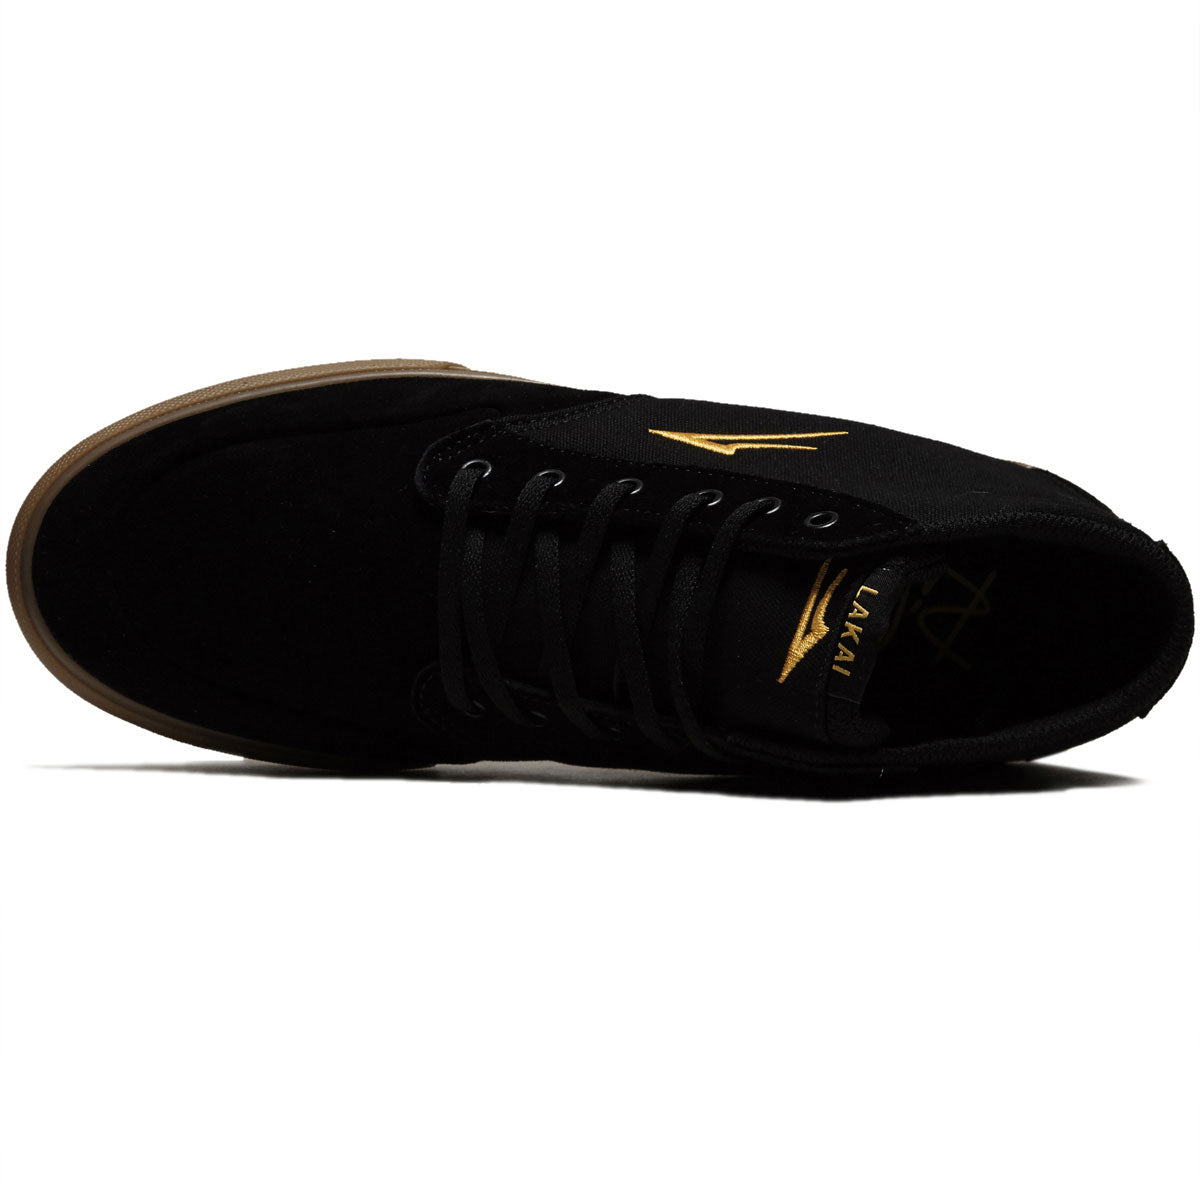 Lakai Riley 3 High Shoes - Black/Gum Suede image 3